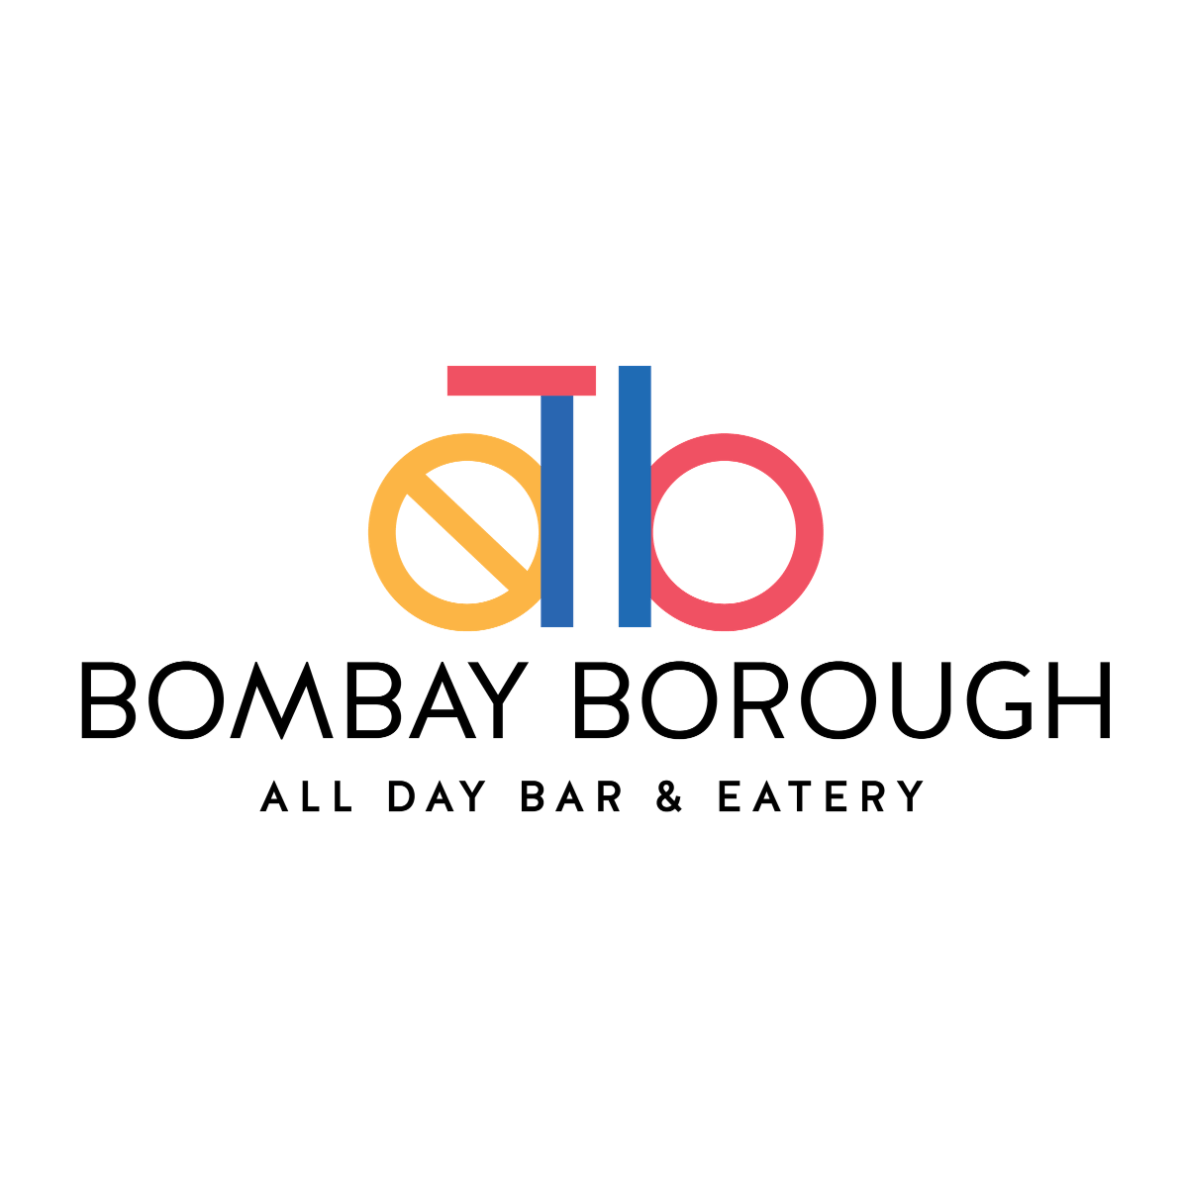 Bombay Borough - Coming Soon in UAE